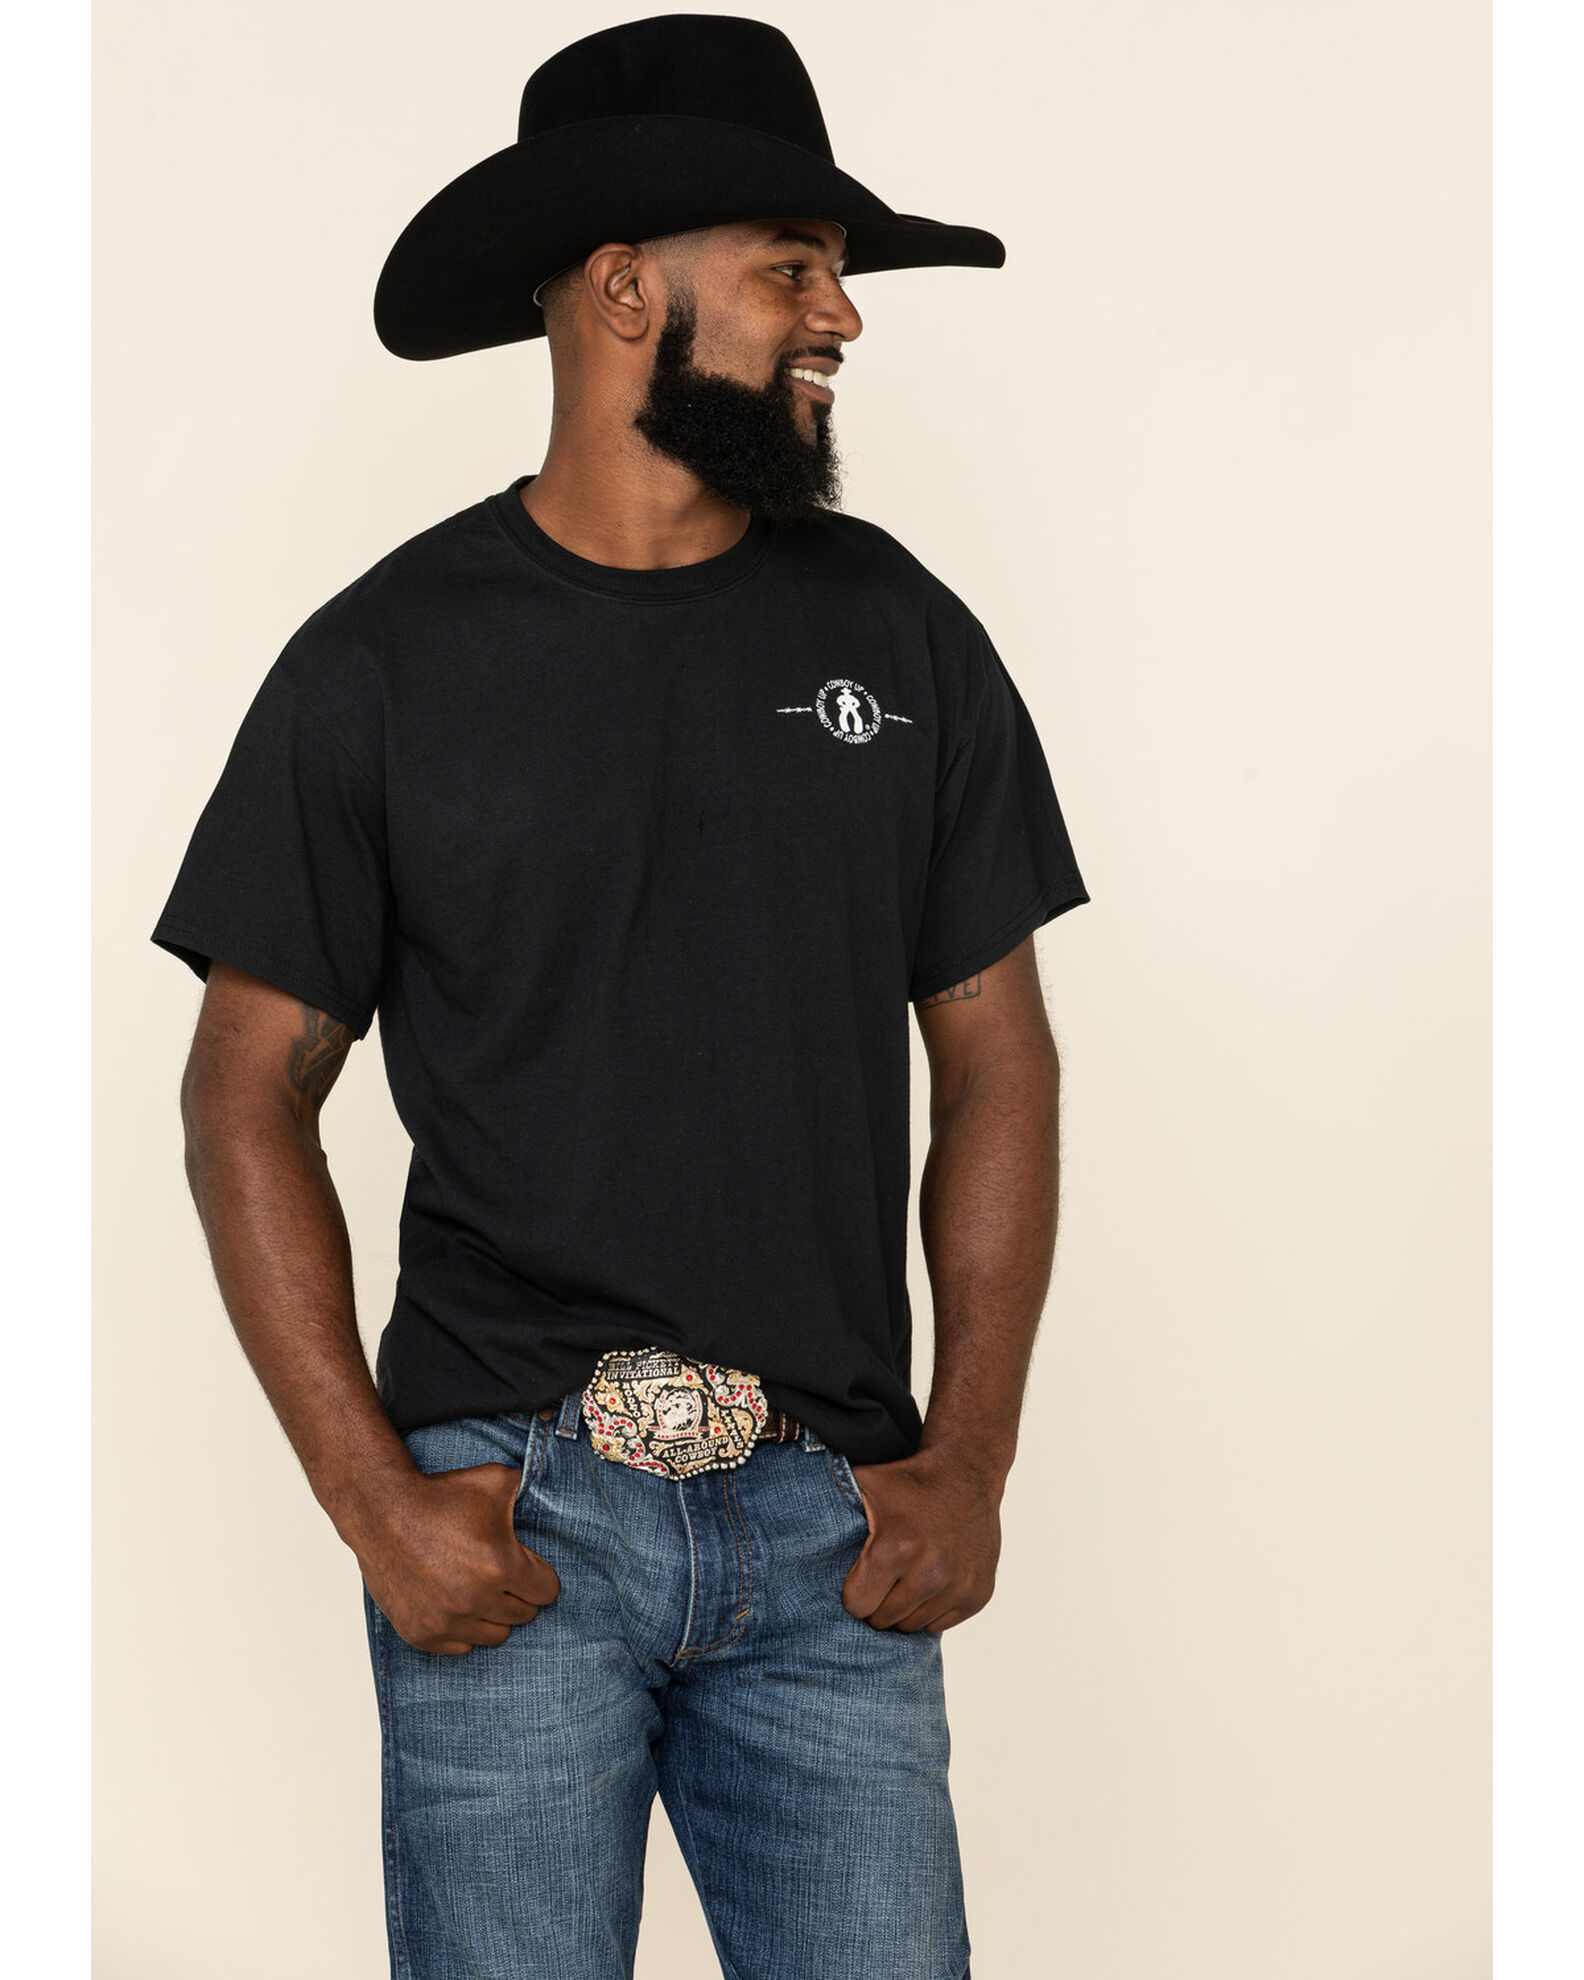 Good quality MINNRI Men's Bray Wyatt Find Me T-Shirt Men's Basic Short  Sleeve T-Shirt Black 4X-Large 